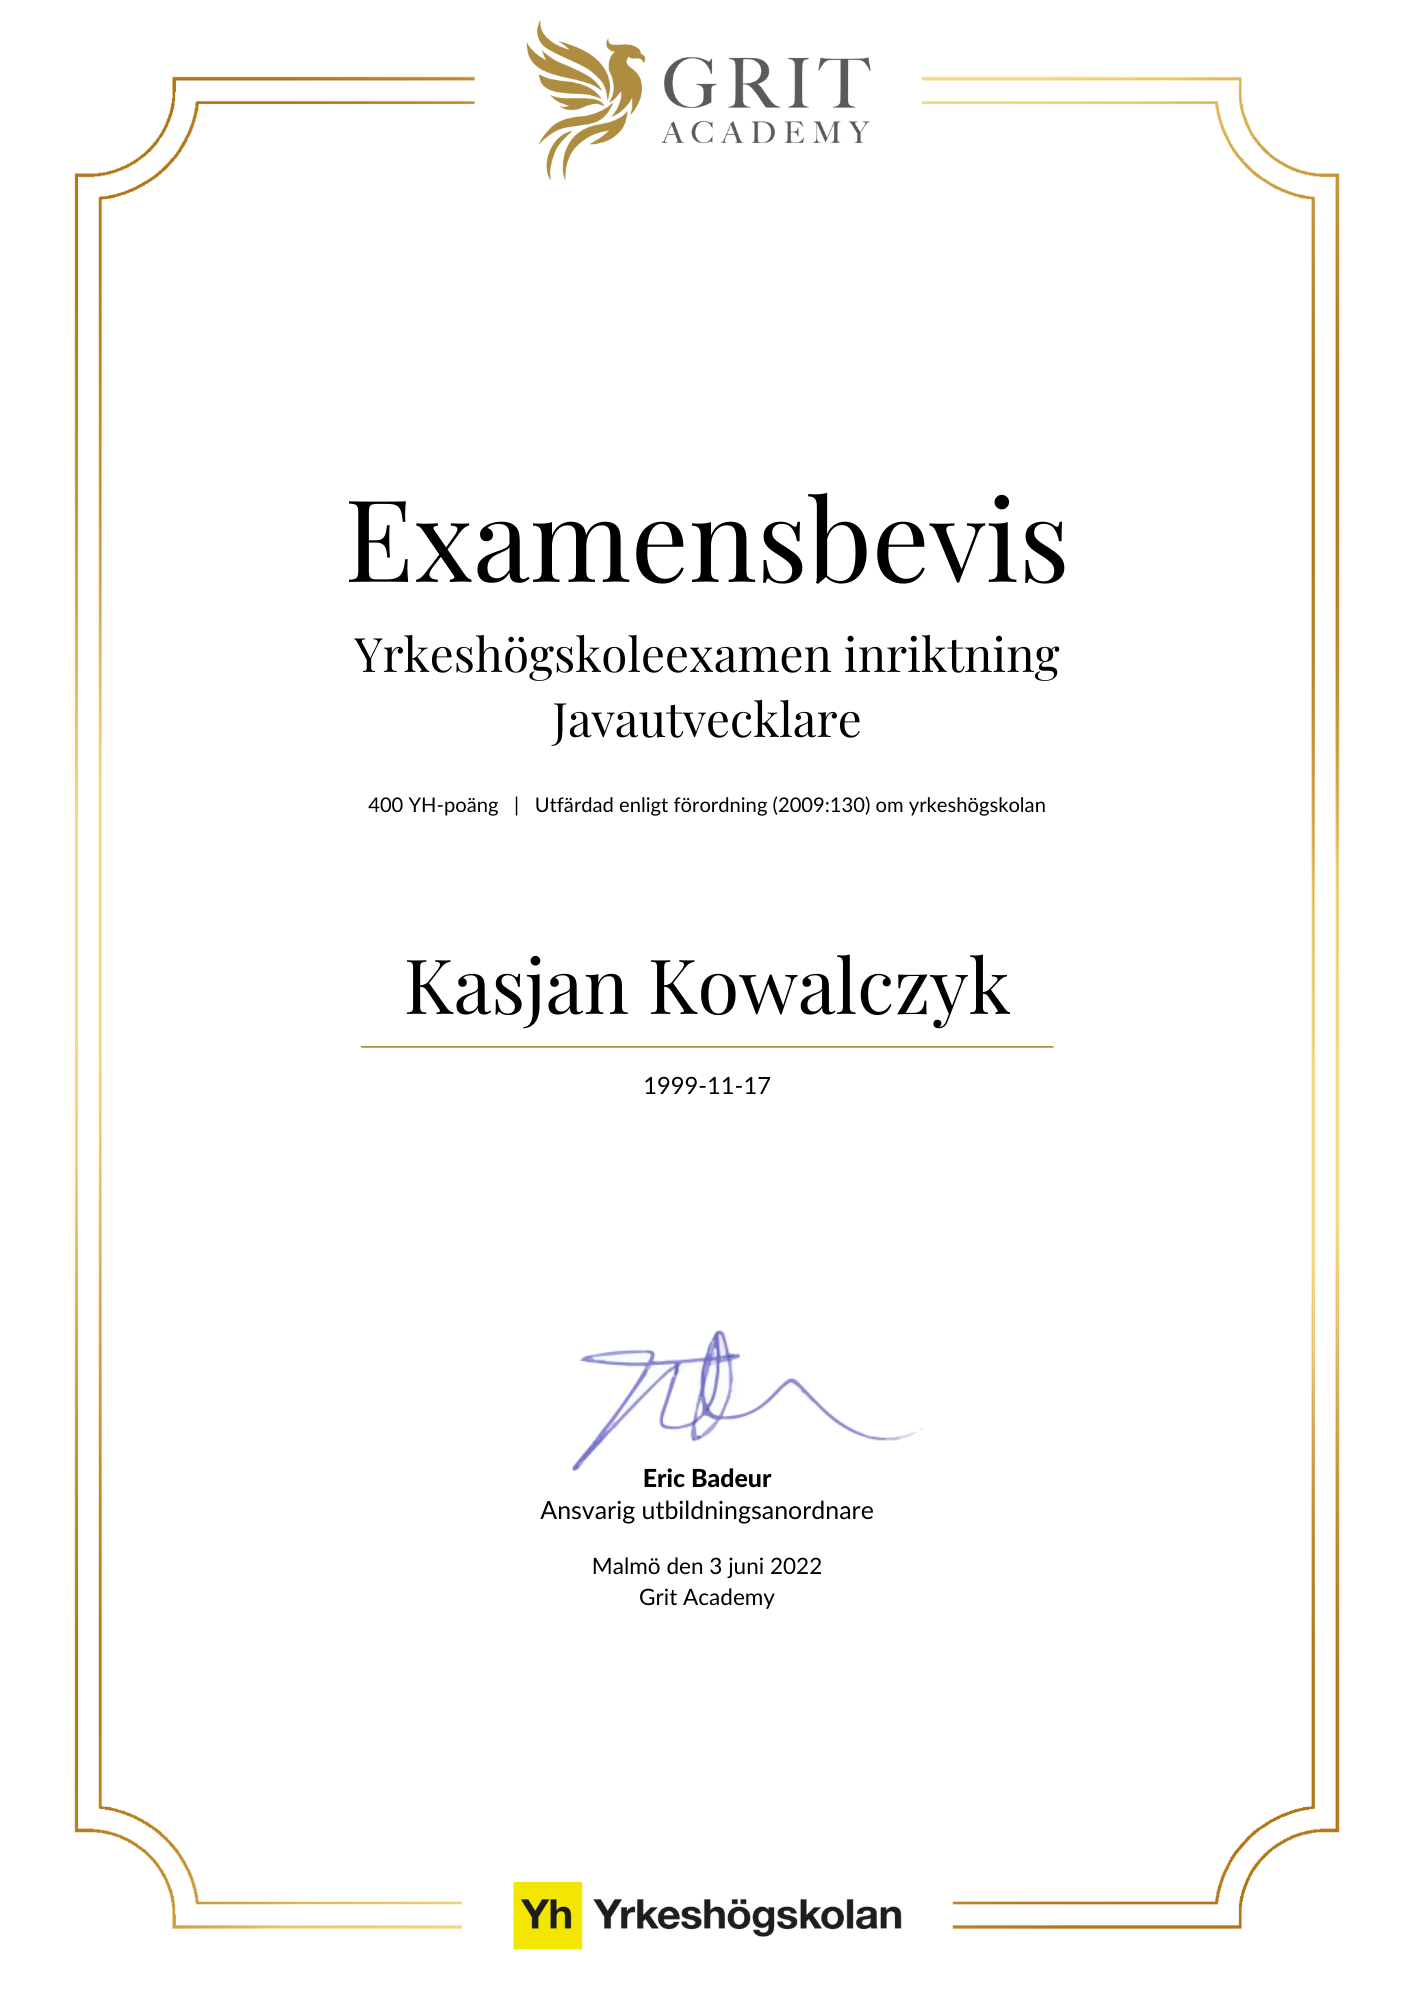 Examensbevis Kasjan Kowalczyk - 1